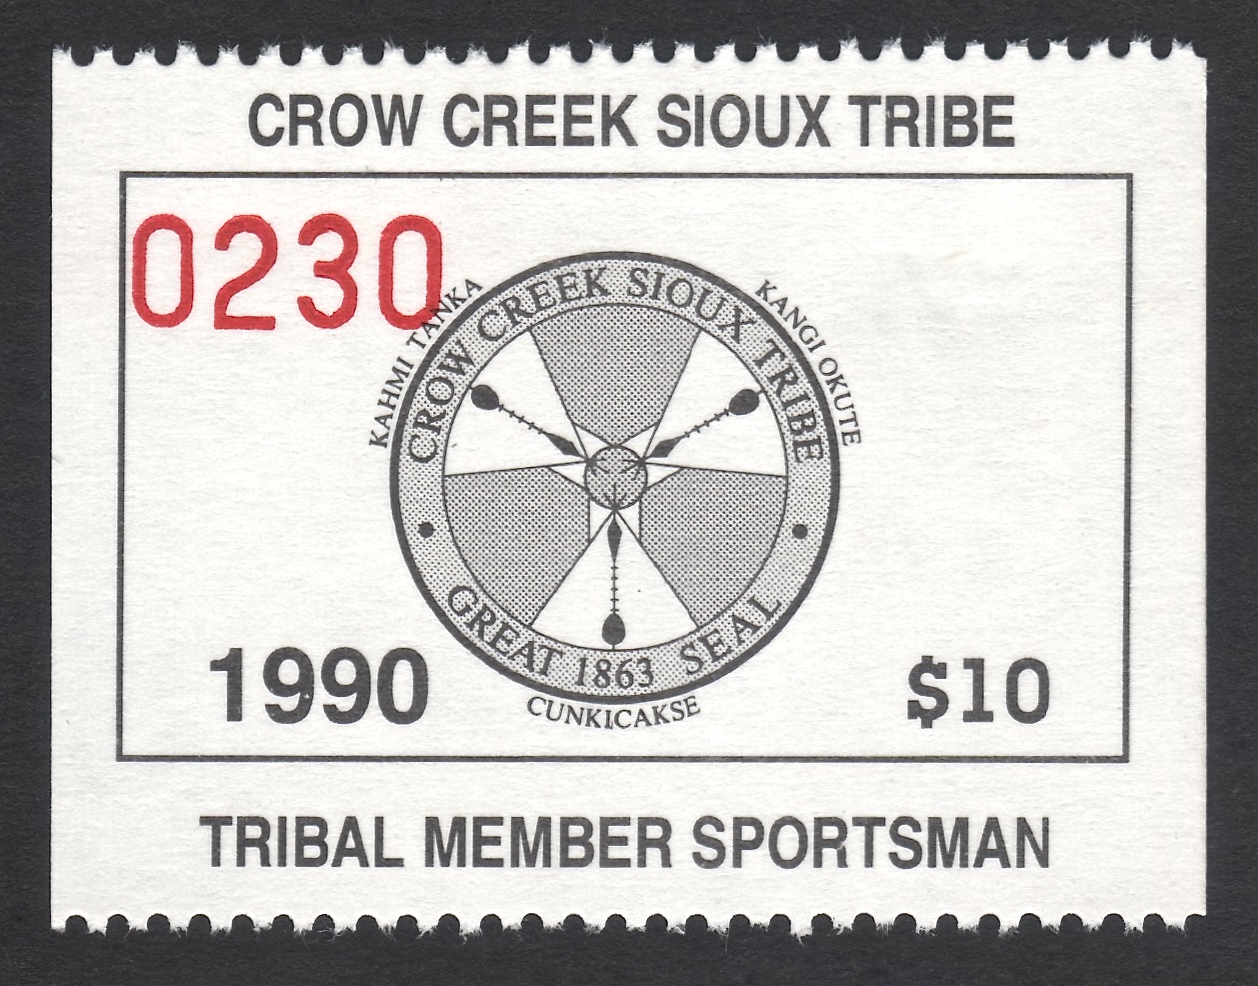 1990 Crow Creek Tribal Member Sportsman